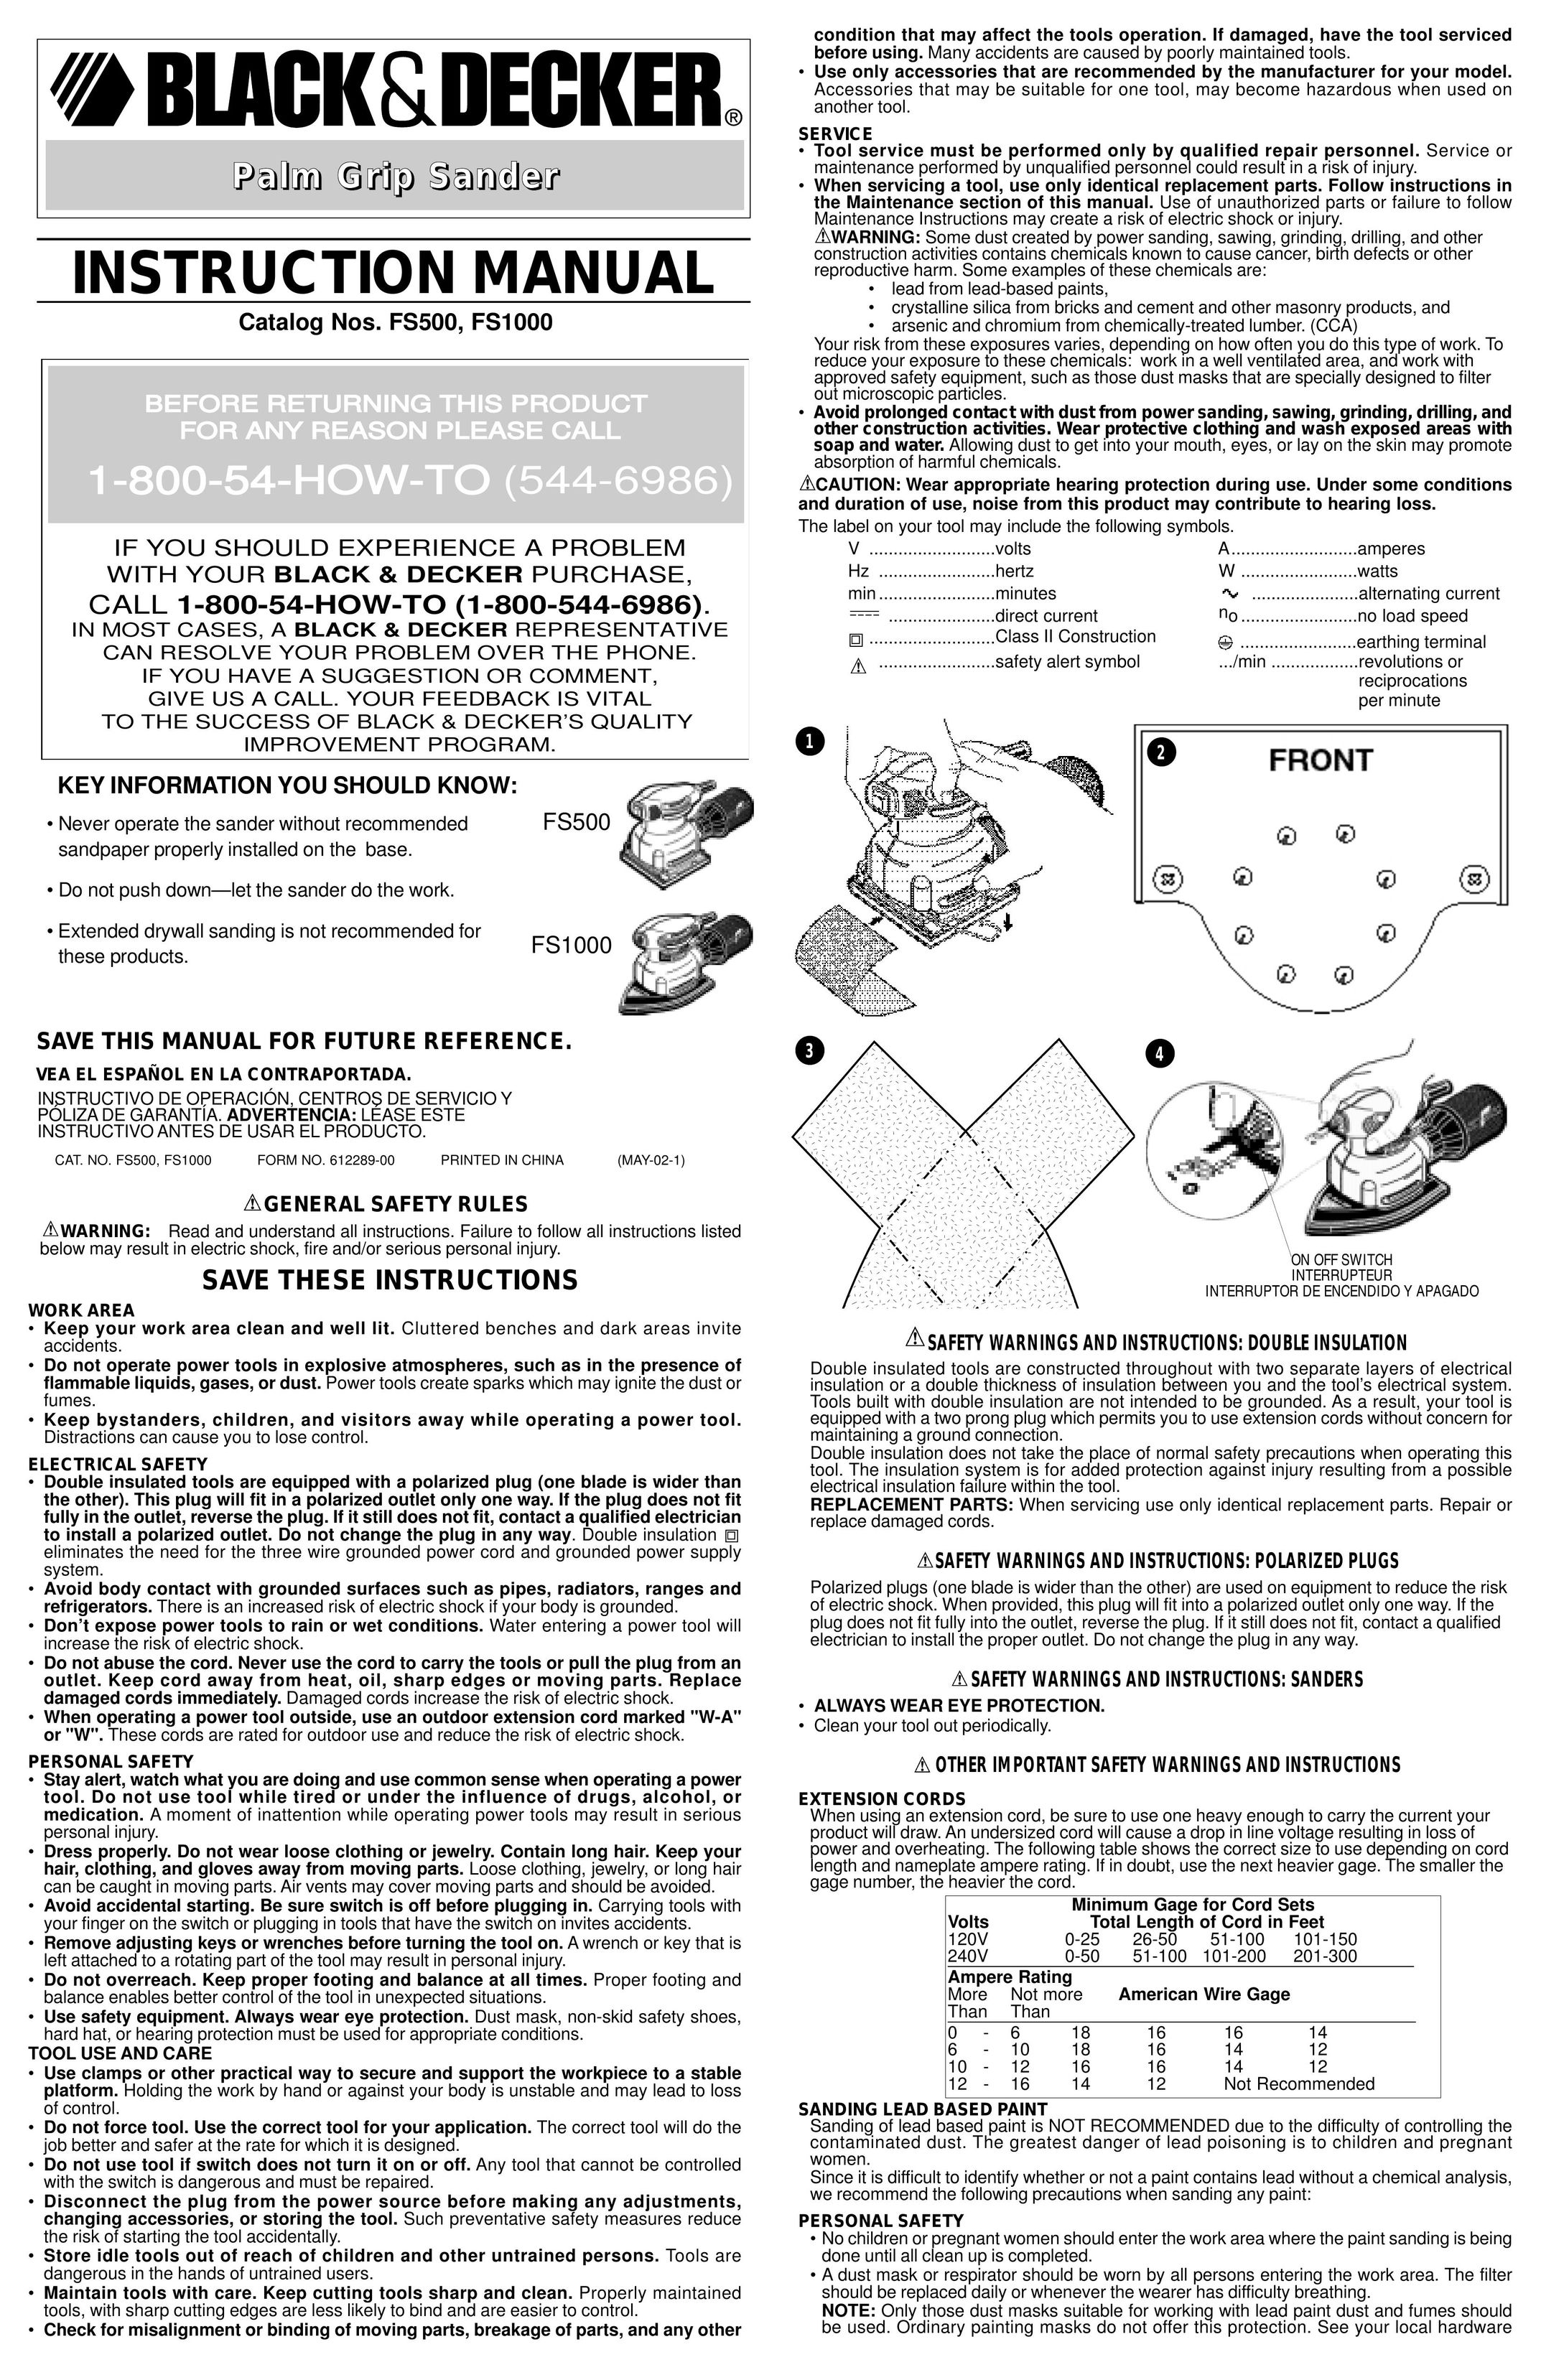 Black & Decker 612289-00 Sander User Manual